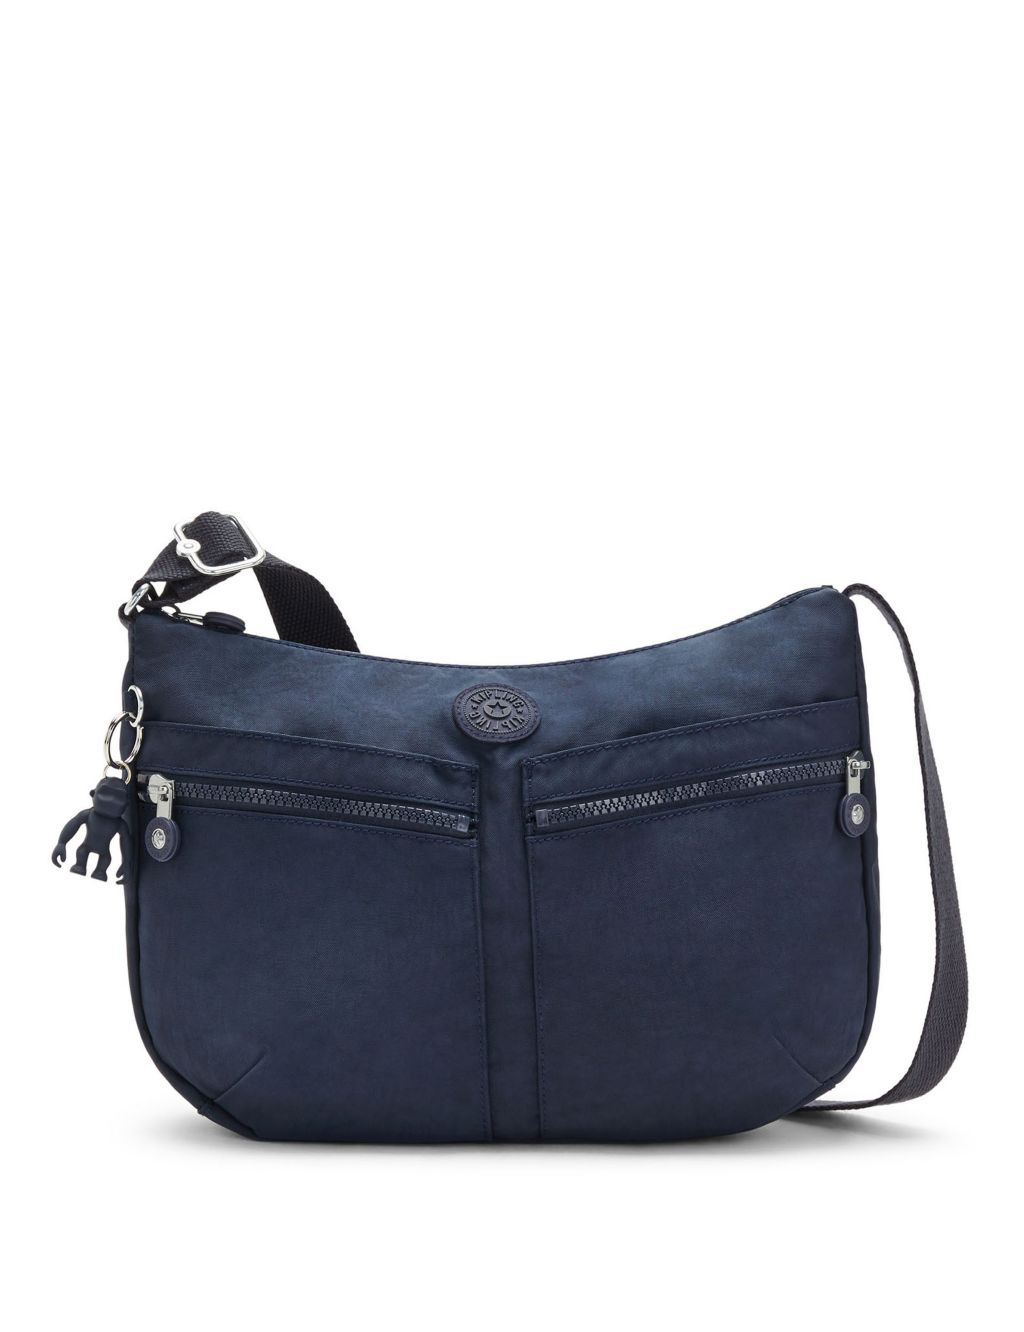 Kipling | Handbags & Accessories | M&S